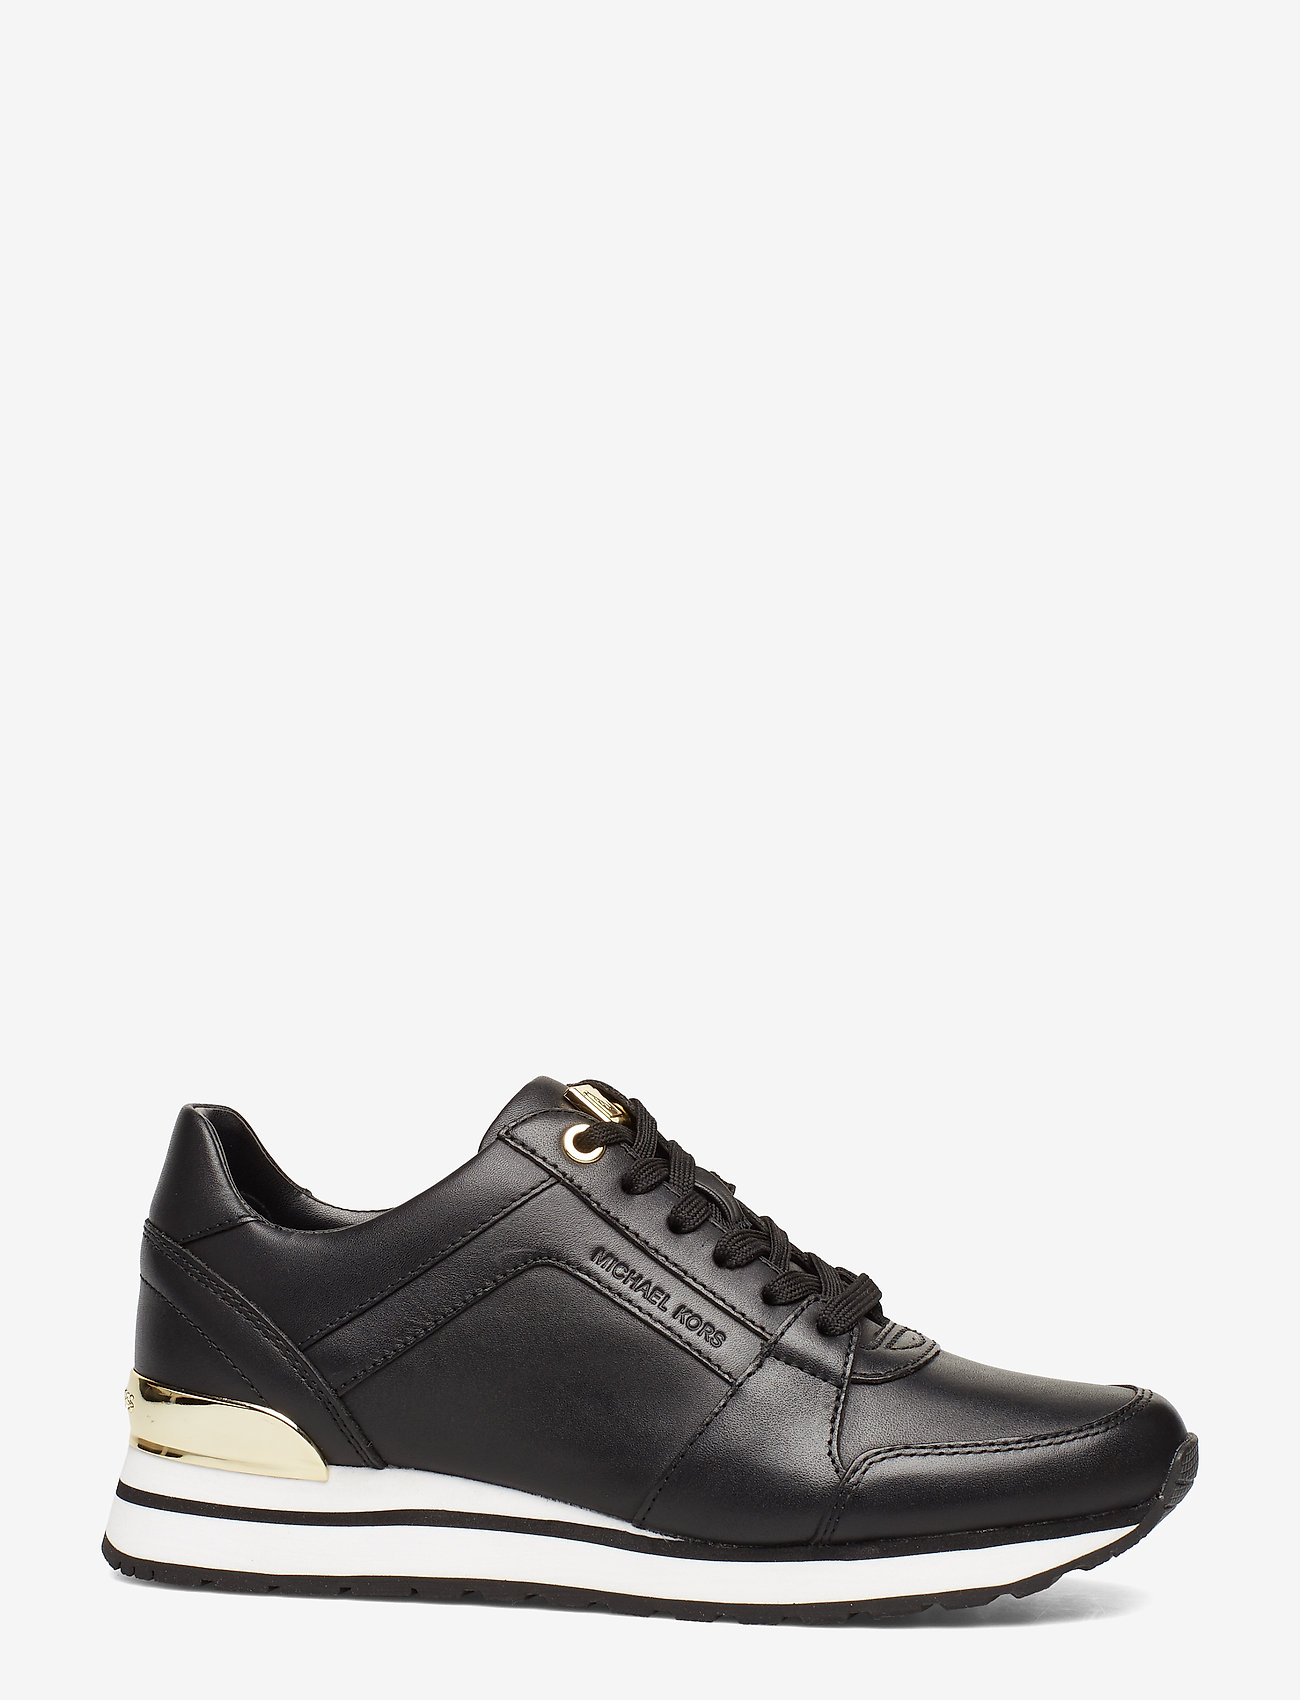 Michael Kors Billie Trainer - Sneakers | Boozt.com